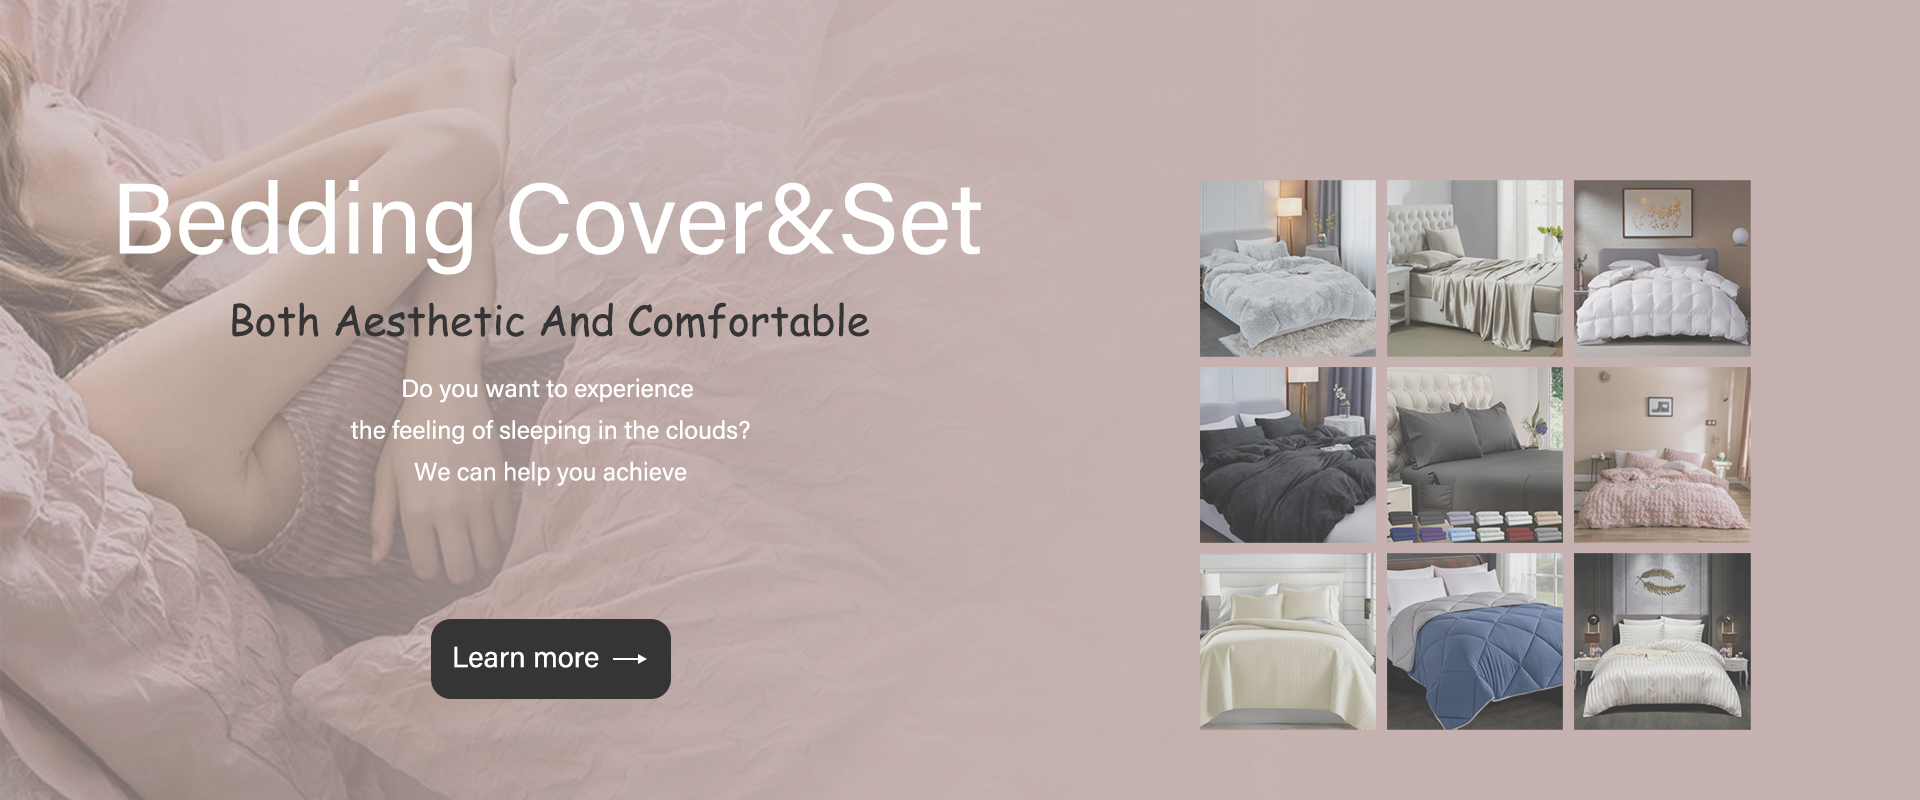 Bedding Cover&Set